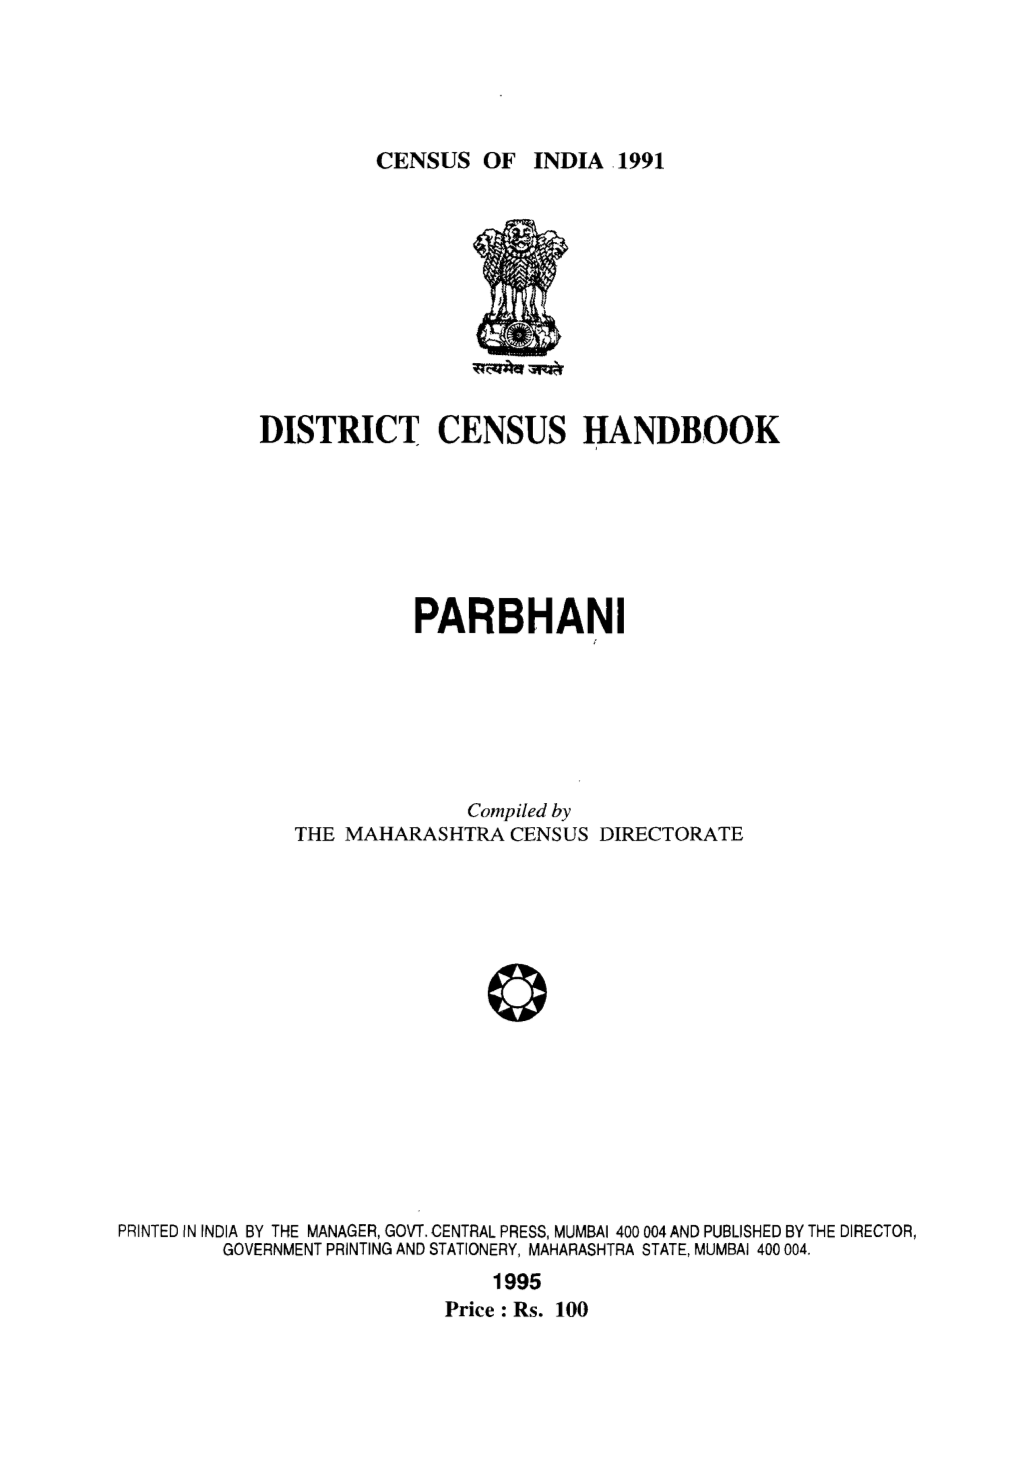 District Census Handbook, Parbhani, Part-XII-A & B, Series-14